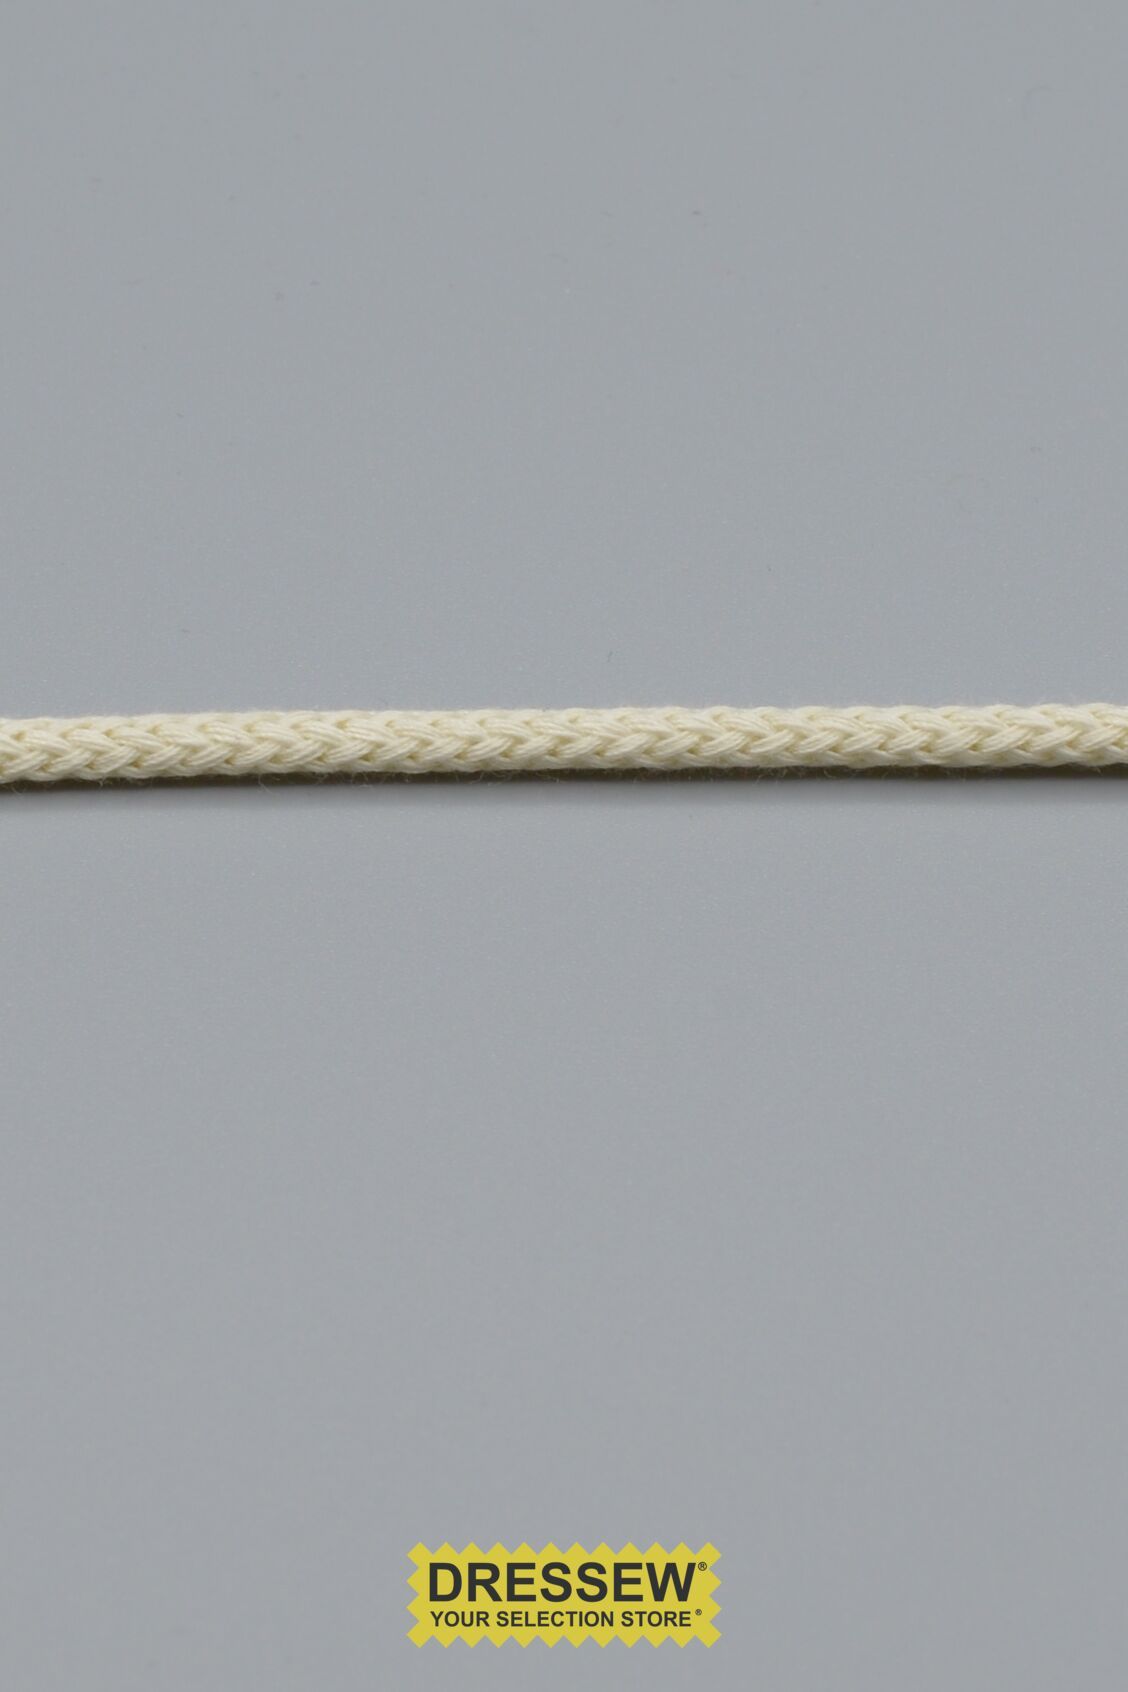 Cord 3mm (1/8") Ivory